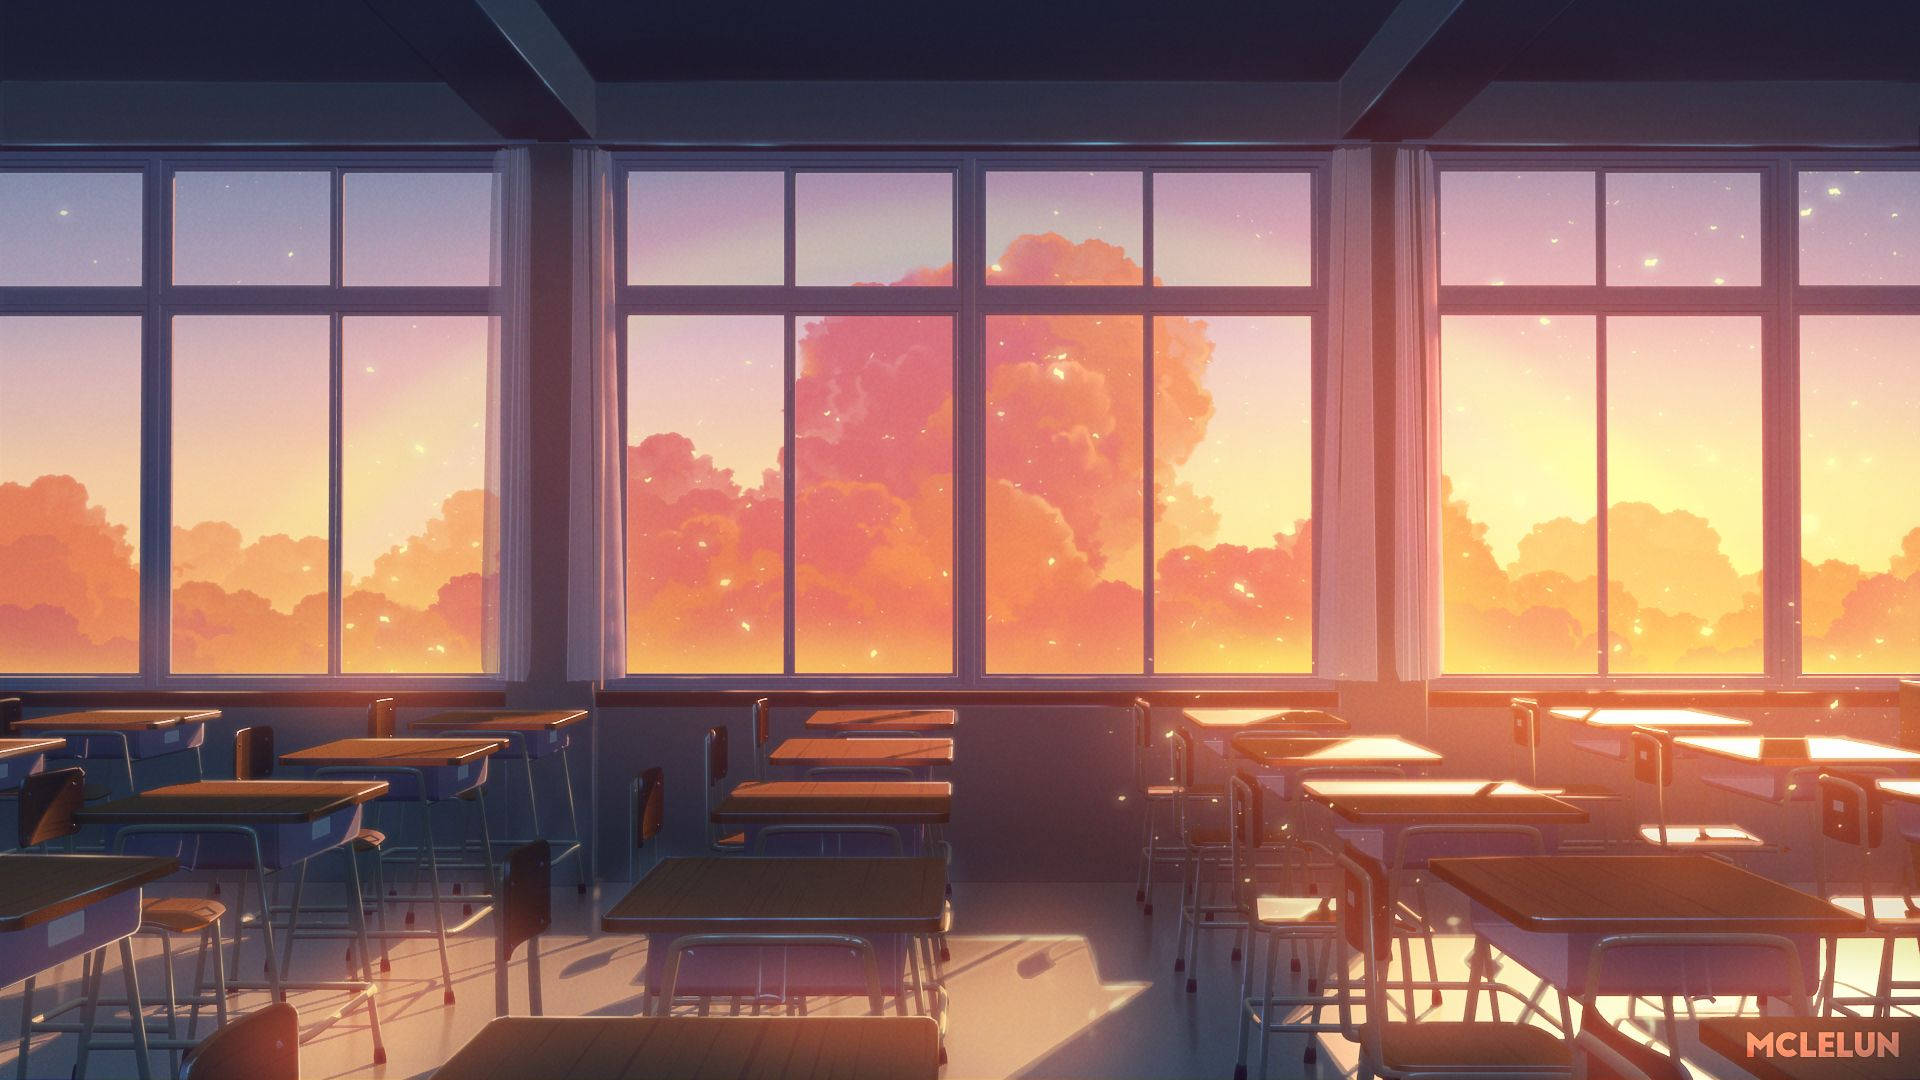 Anime Classroom Sunset Window View Wallpaper